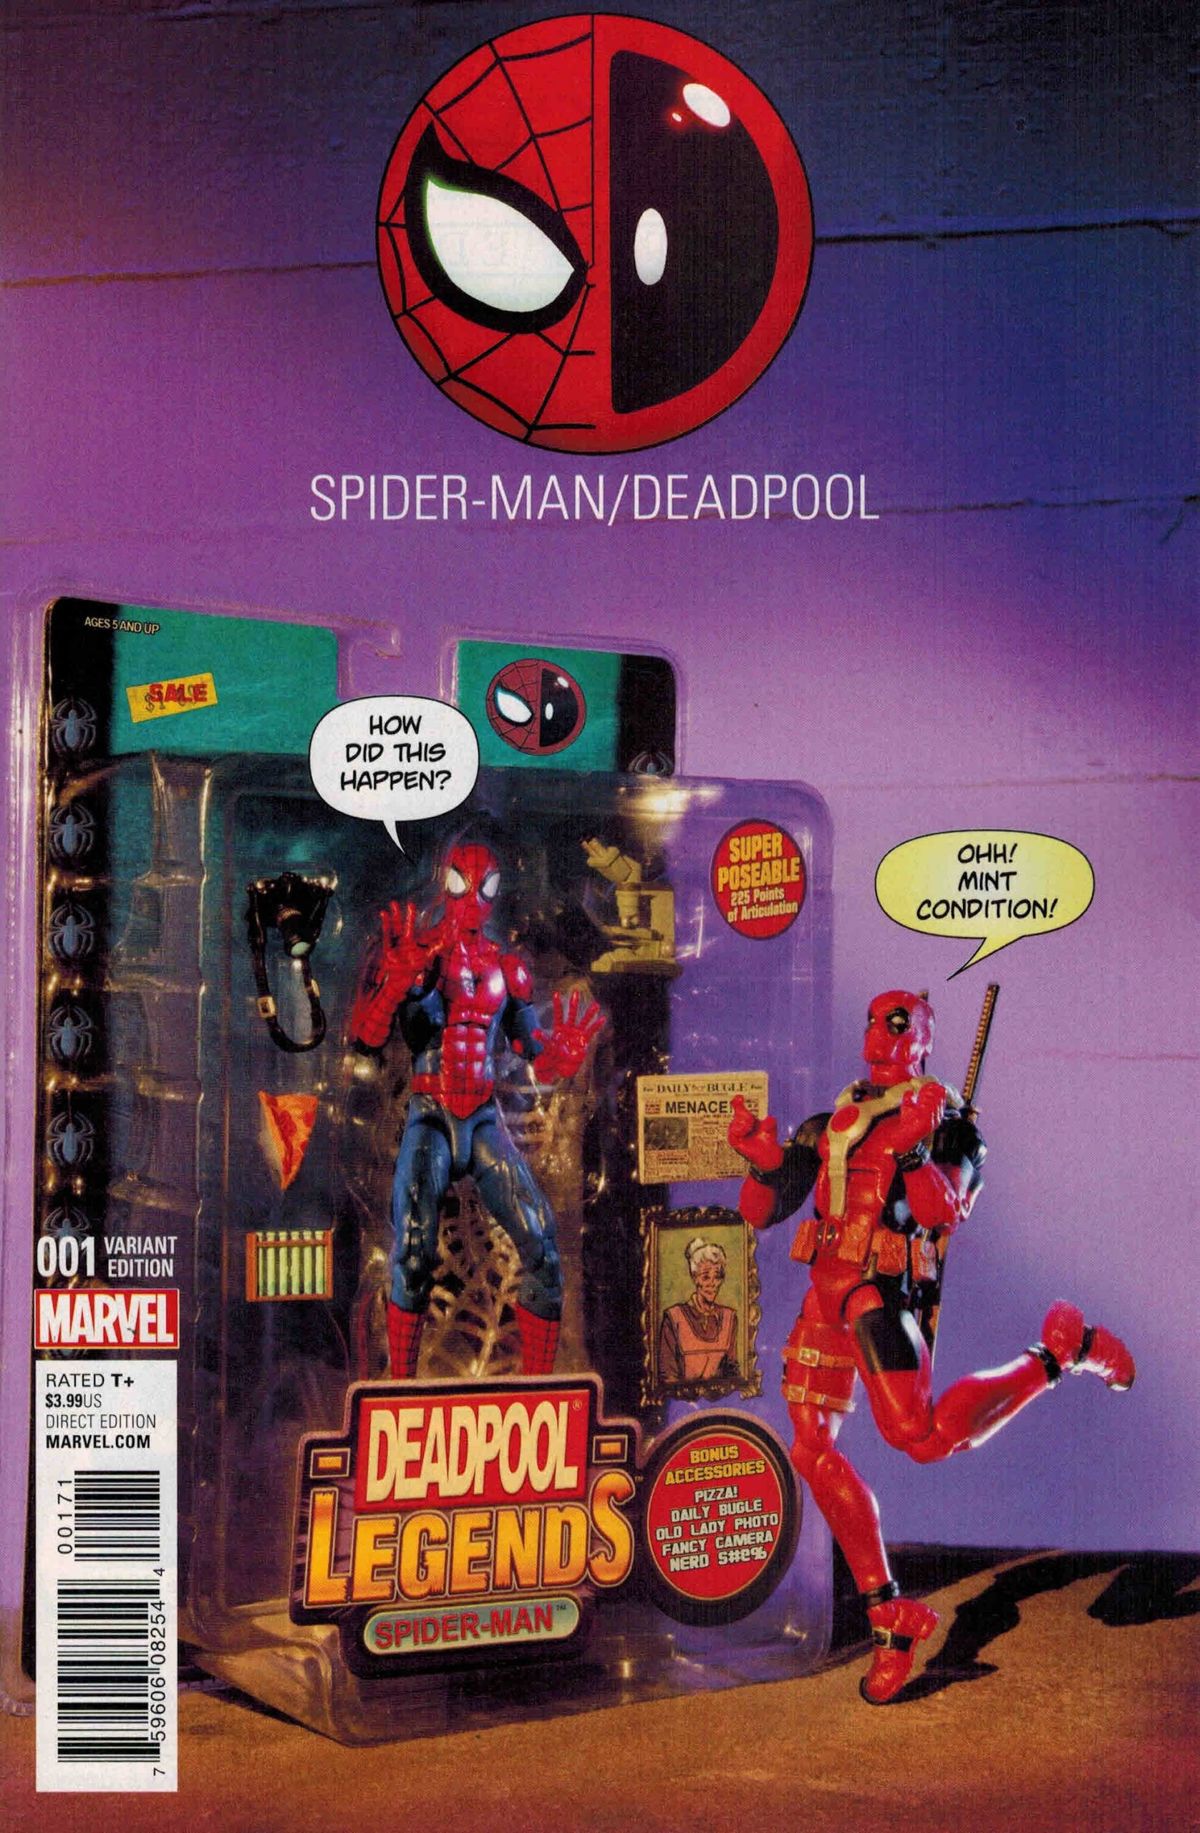 Spider-Man Deadpool #1 Action Figure Photo Variant Marvel 2016 Anad ... - 1 11 2016 26 ScaleD